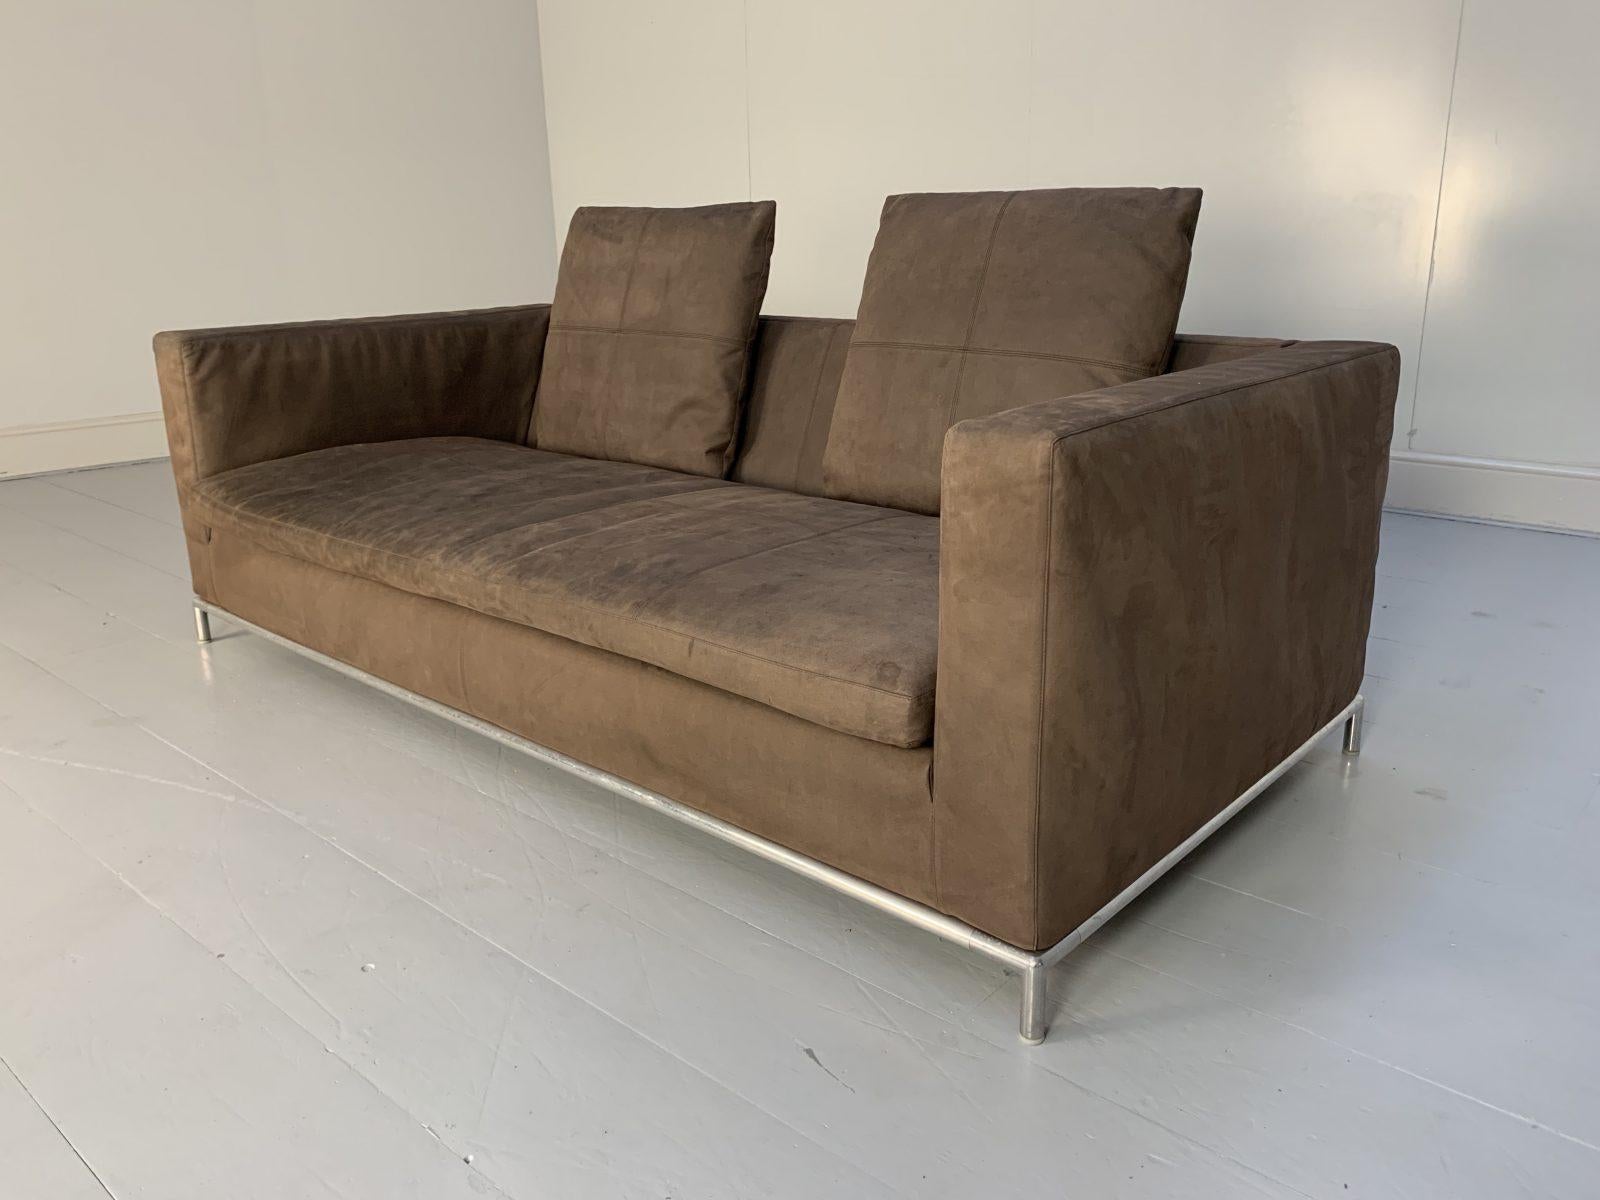 B&B Italia “George” Sofa 2.5-Seat Sofa in Brown Alcantara Suede In Good Condition For Sale In Barrowford, GB